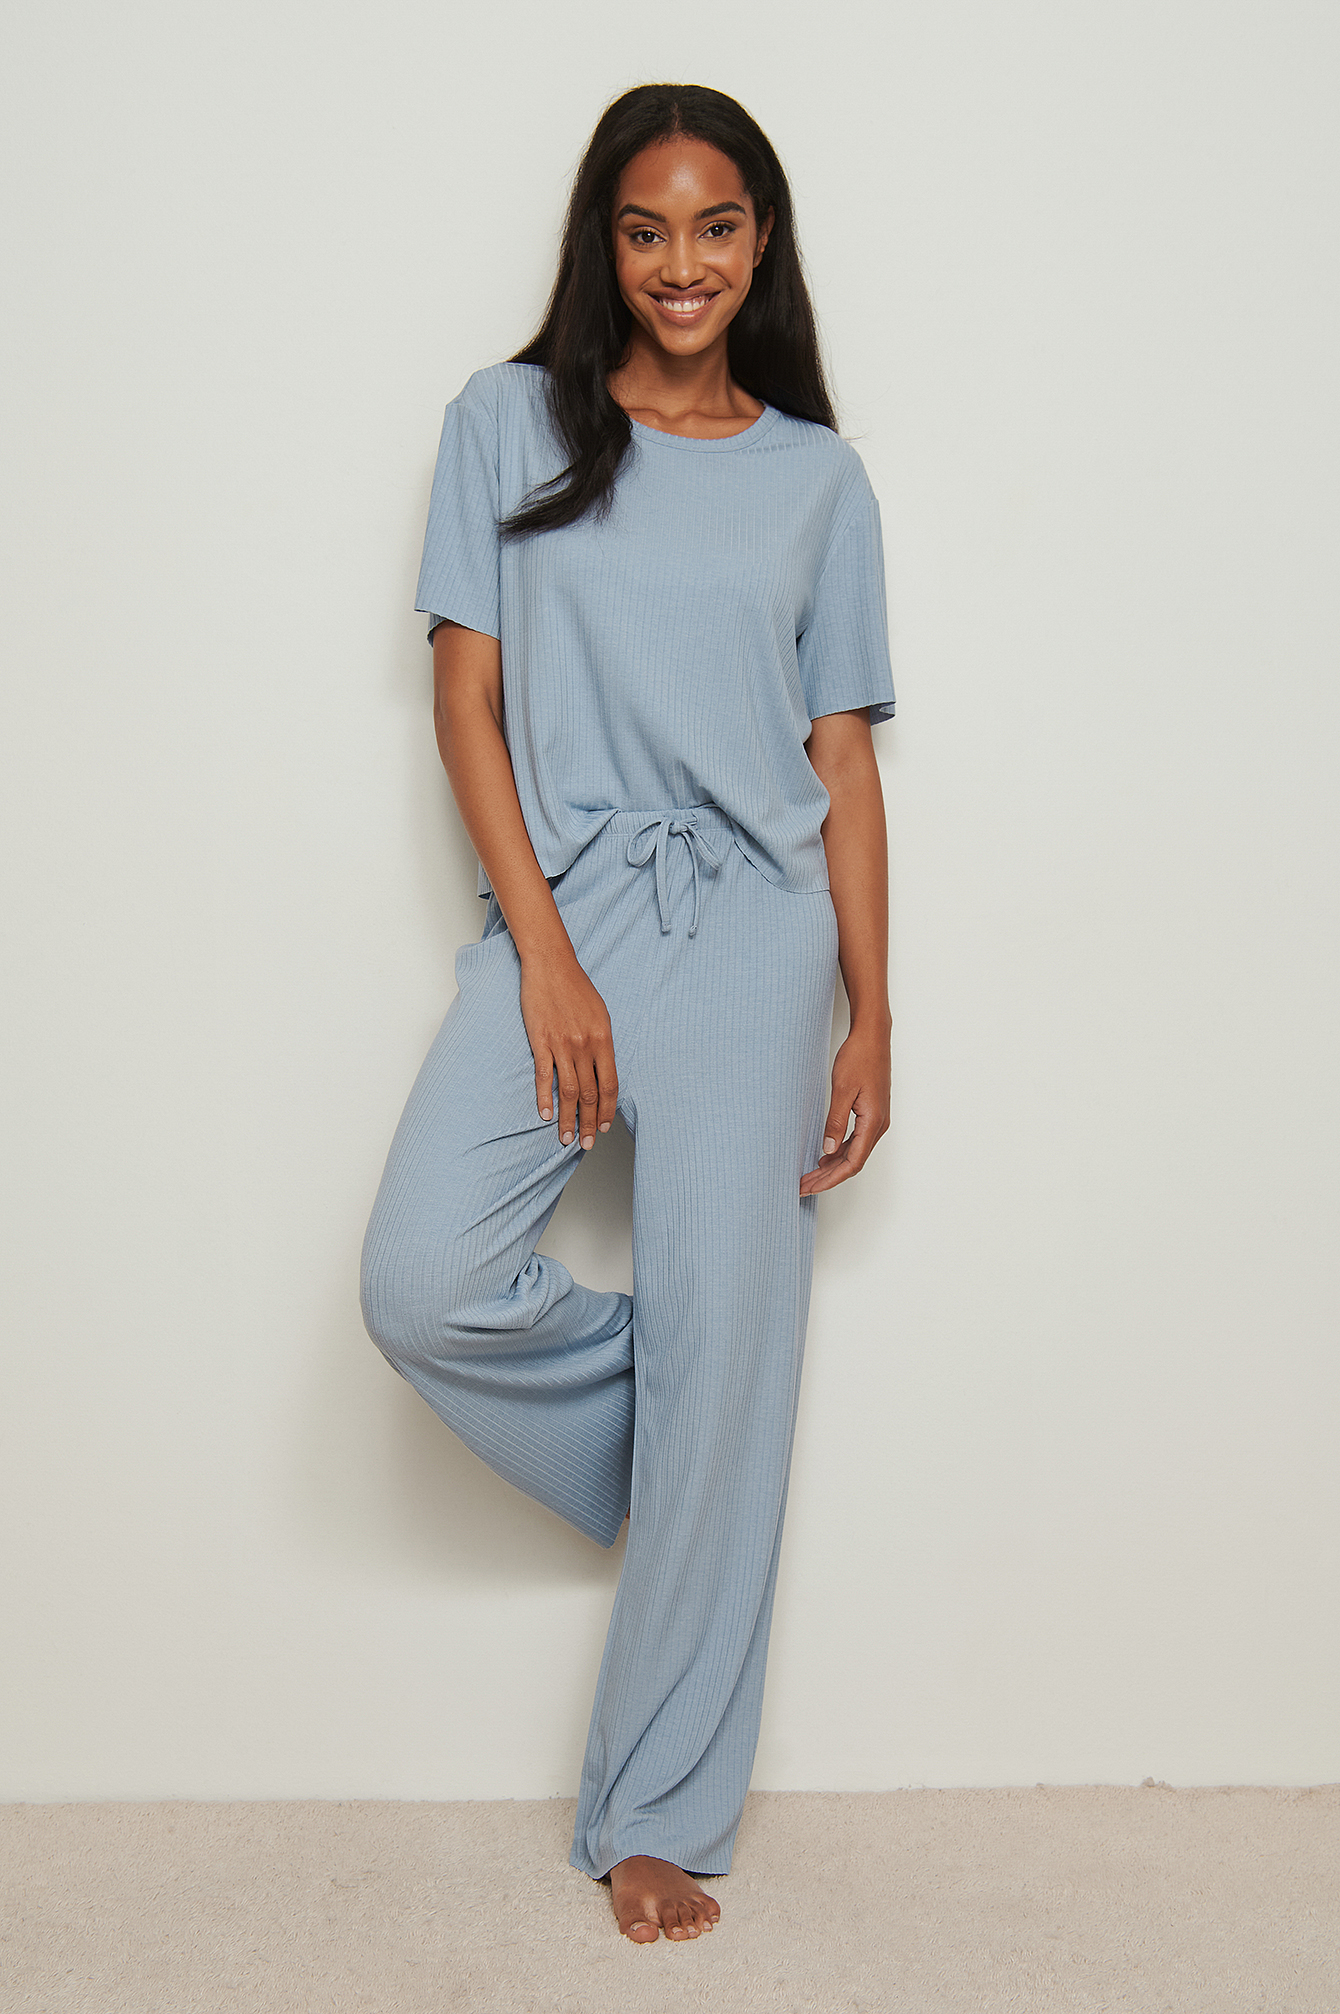 Kleding Dameskleding Pyjamas & Badjassen Pyjamashorts & Pyjamabroeken Broek 100% Silk Pajama Set/ Cropped Shirt with Side Slit Lounge Pant/Navy/Cream/great gift for her 